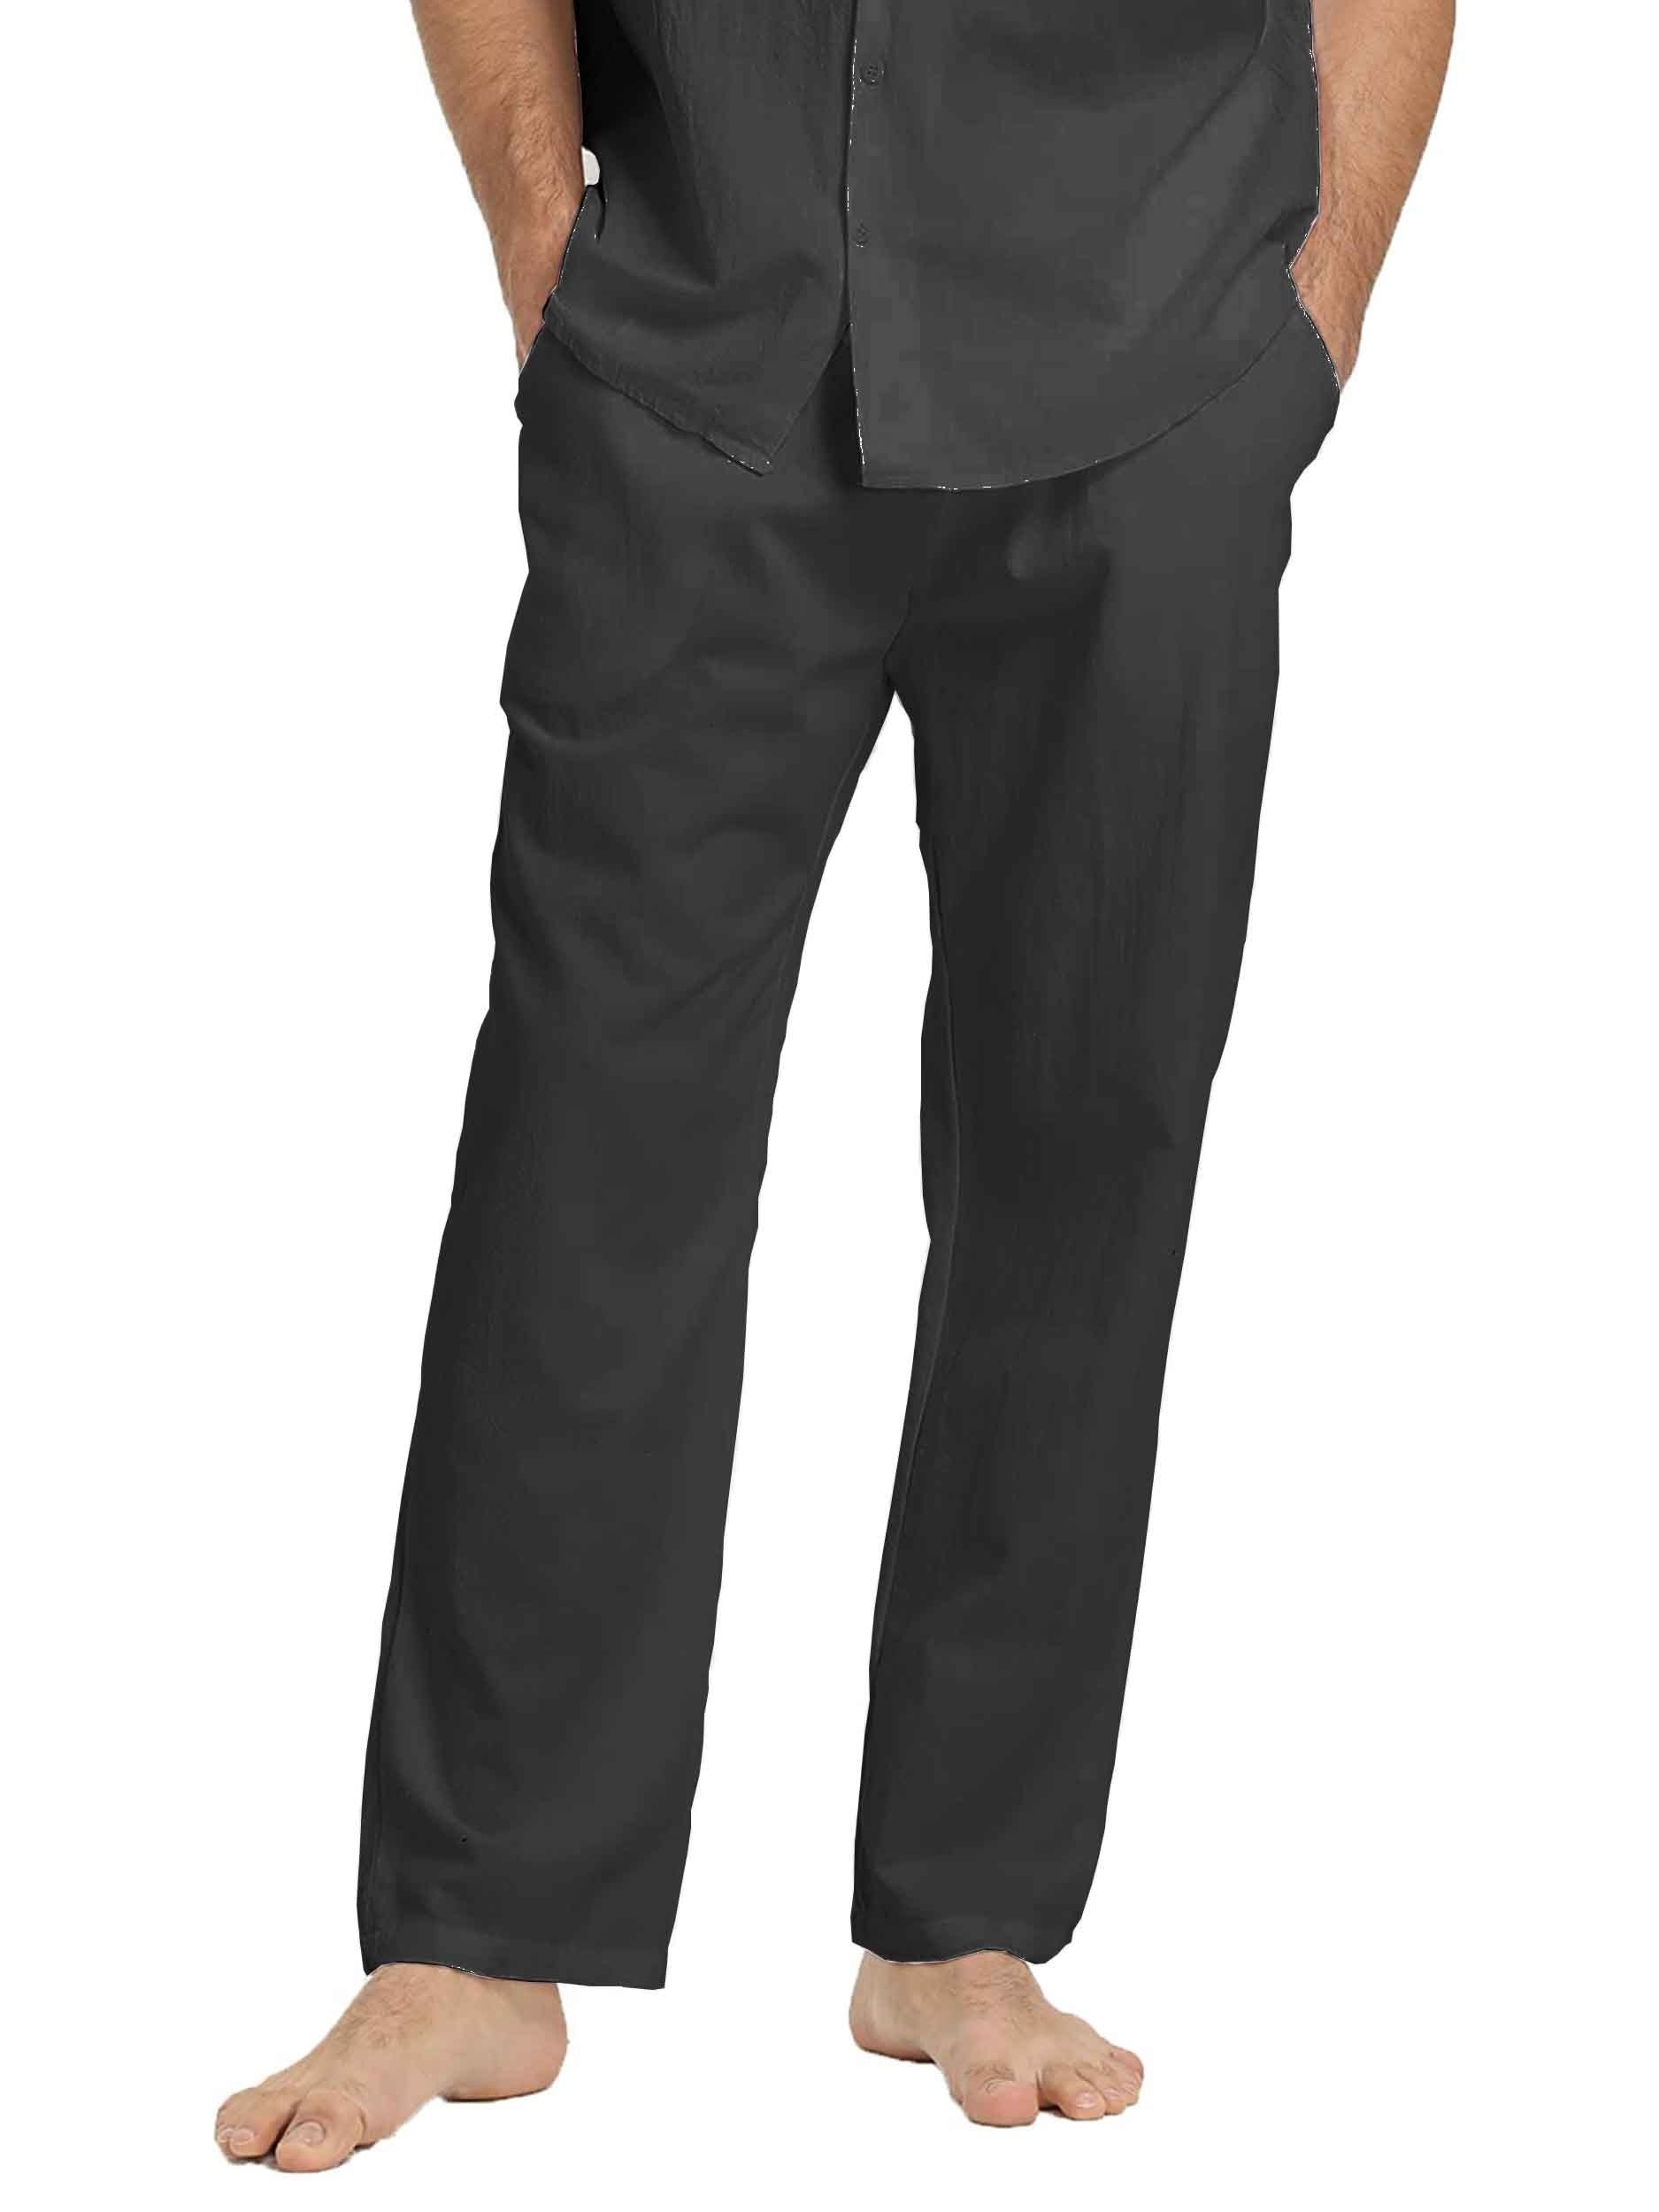 Black Pants for Women Full Length Plain Color Cotton Drawstring Elastic  Waist Trousers Long Straight Pants Comfortable Linen Pants XL